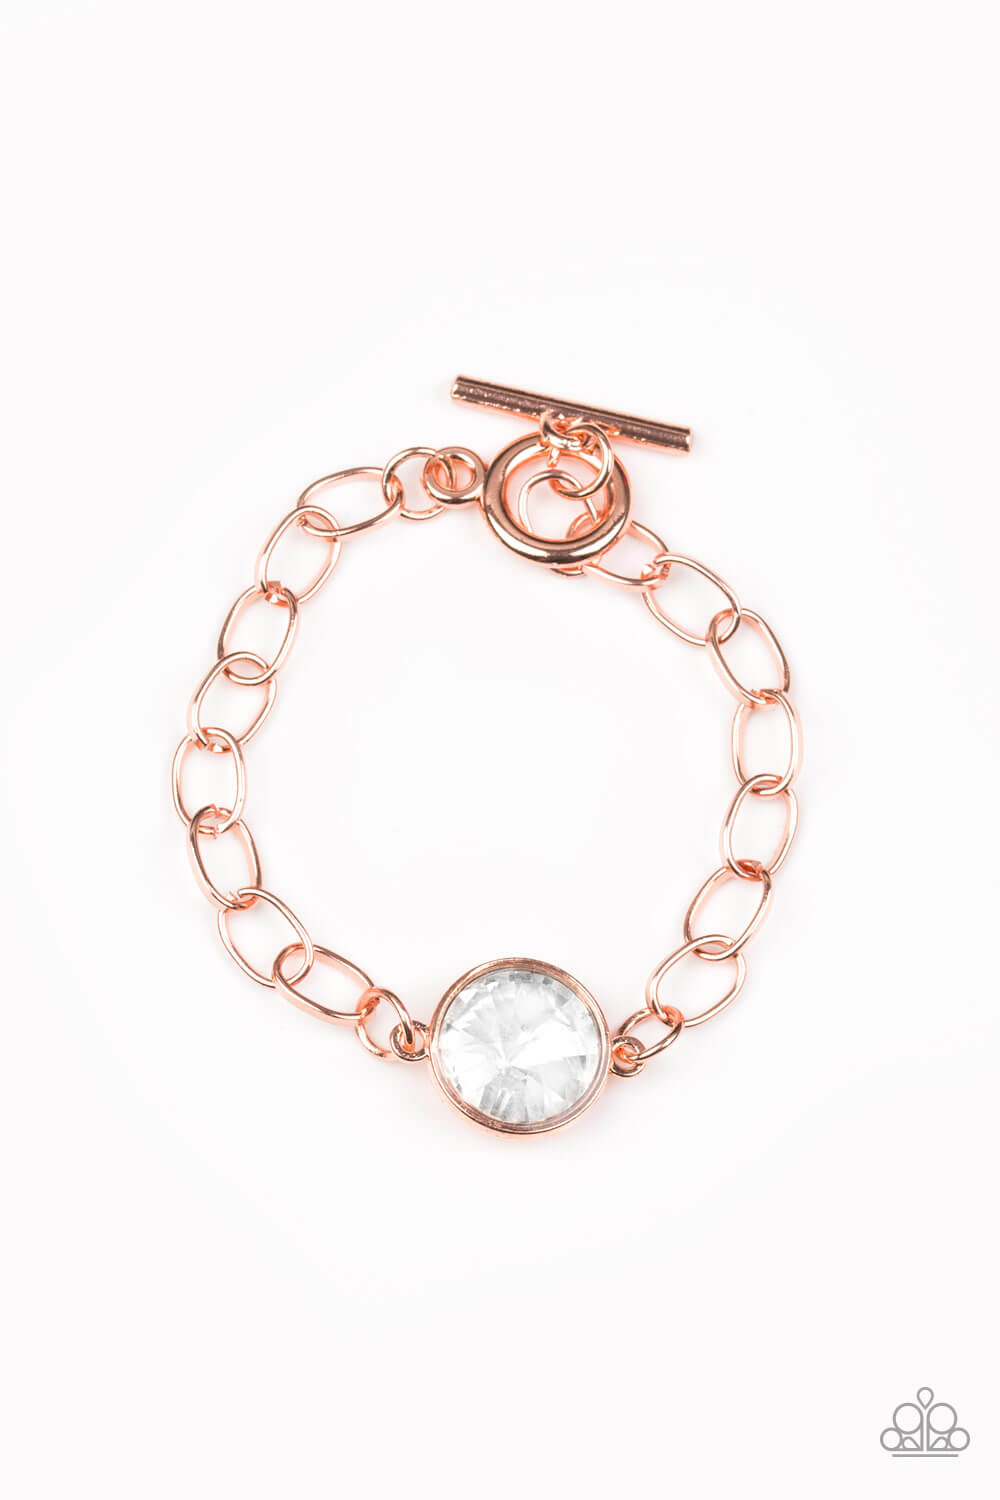 She Sparkles On - Copper & Bling Necklace & Bracelet Combo - Princess Glam Shop